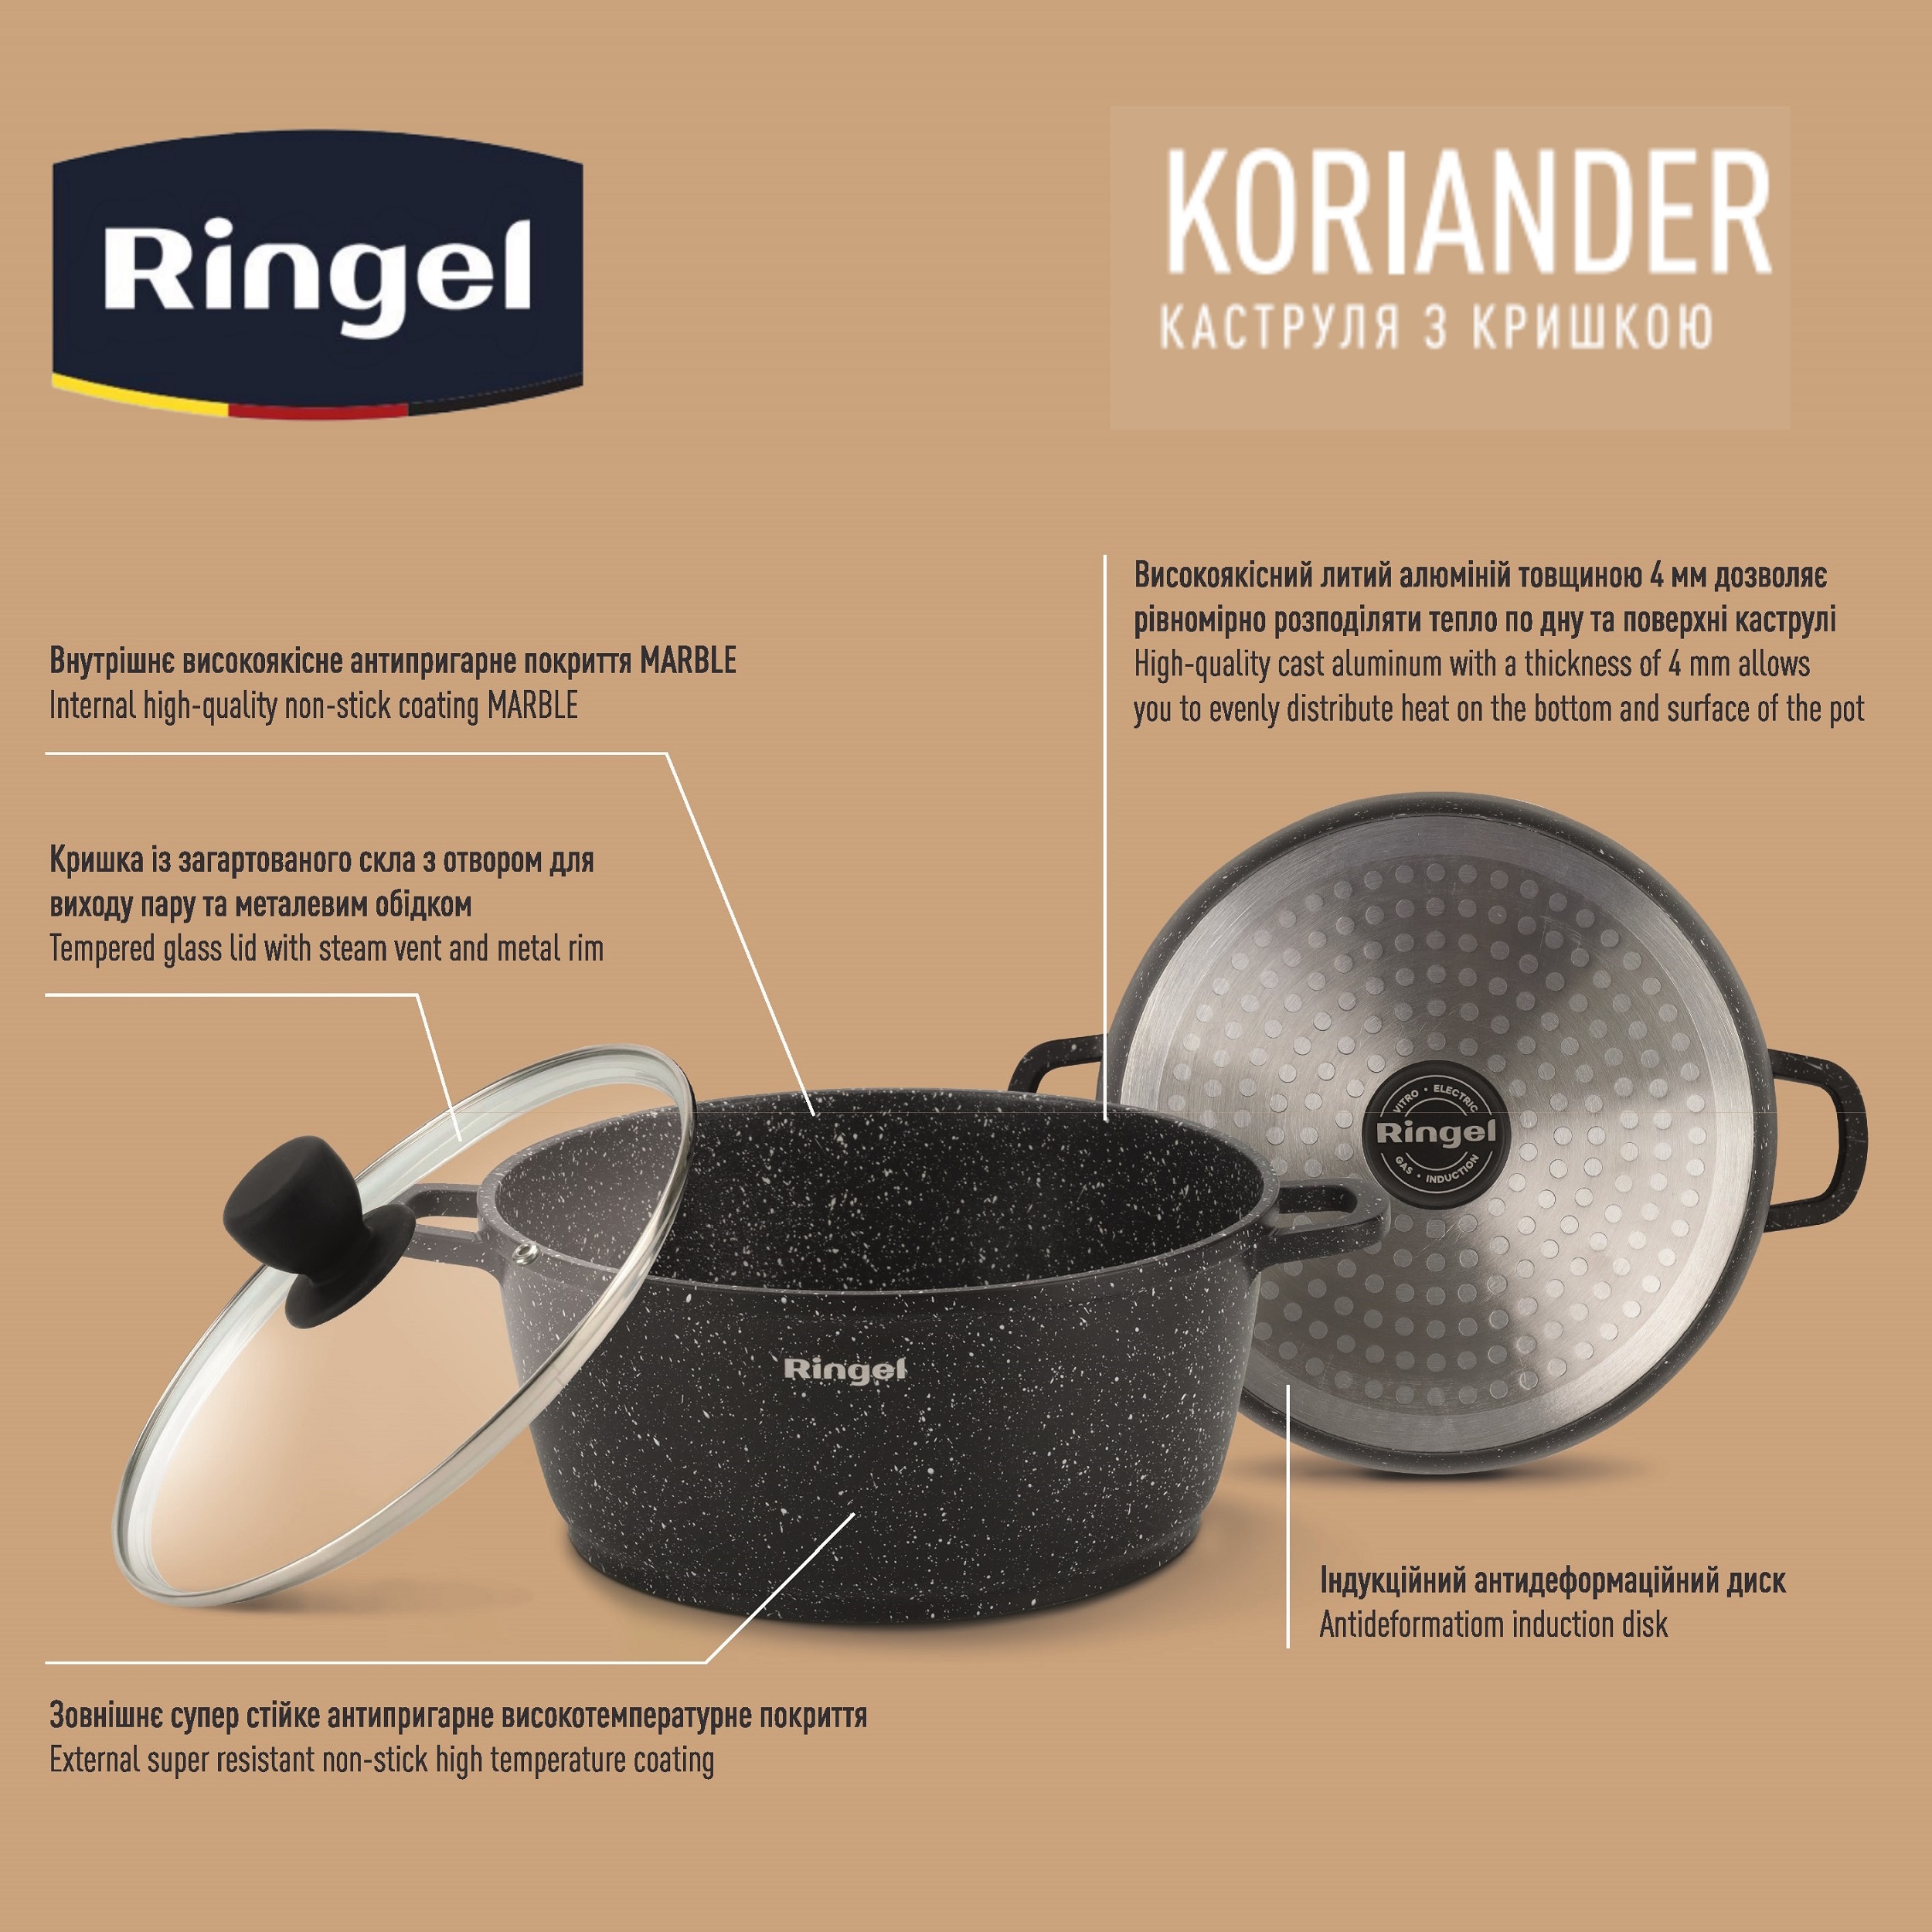 Кастрюля RINGEL RG-2107-24 Koriander 4.5 л, каталог